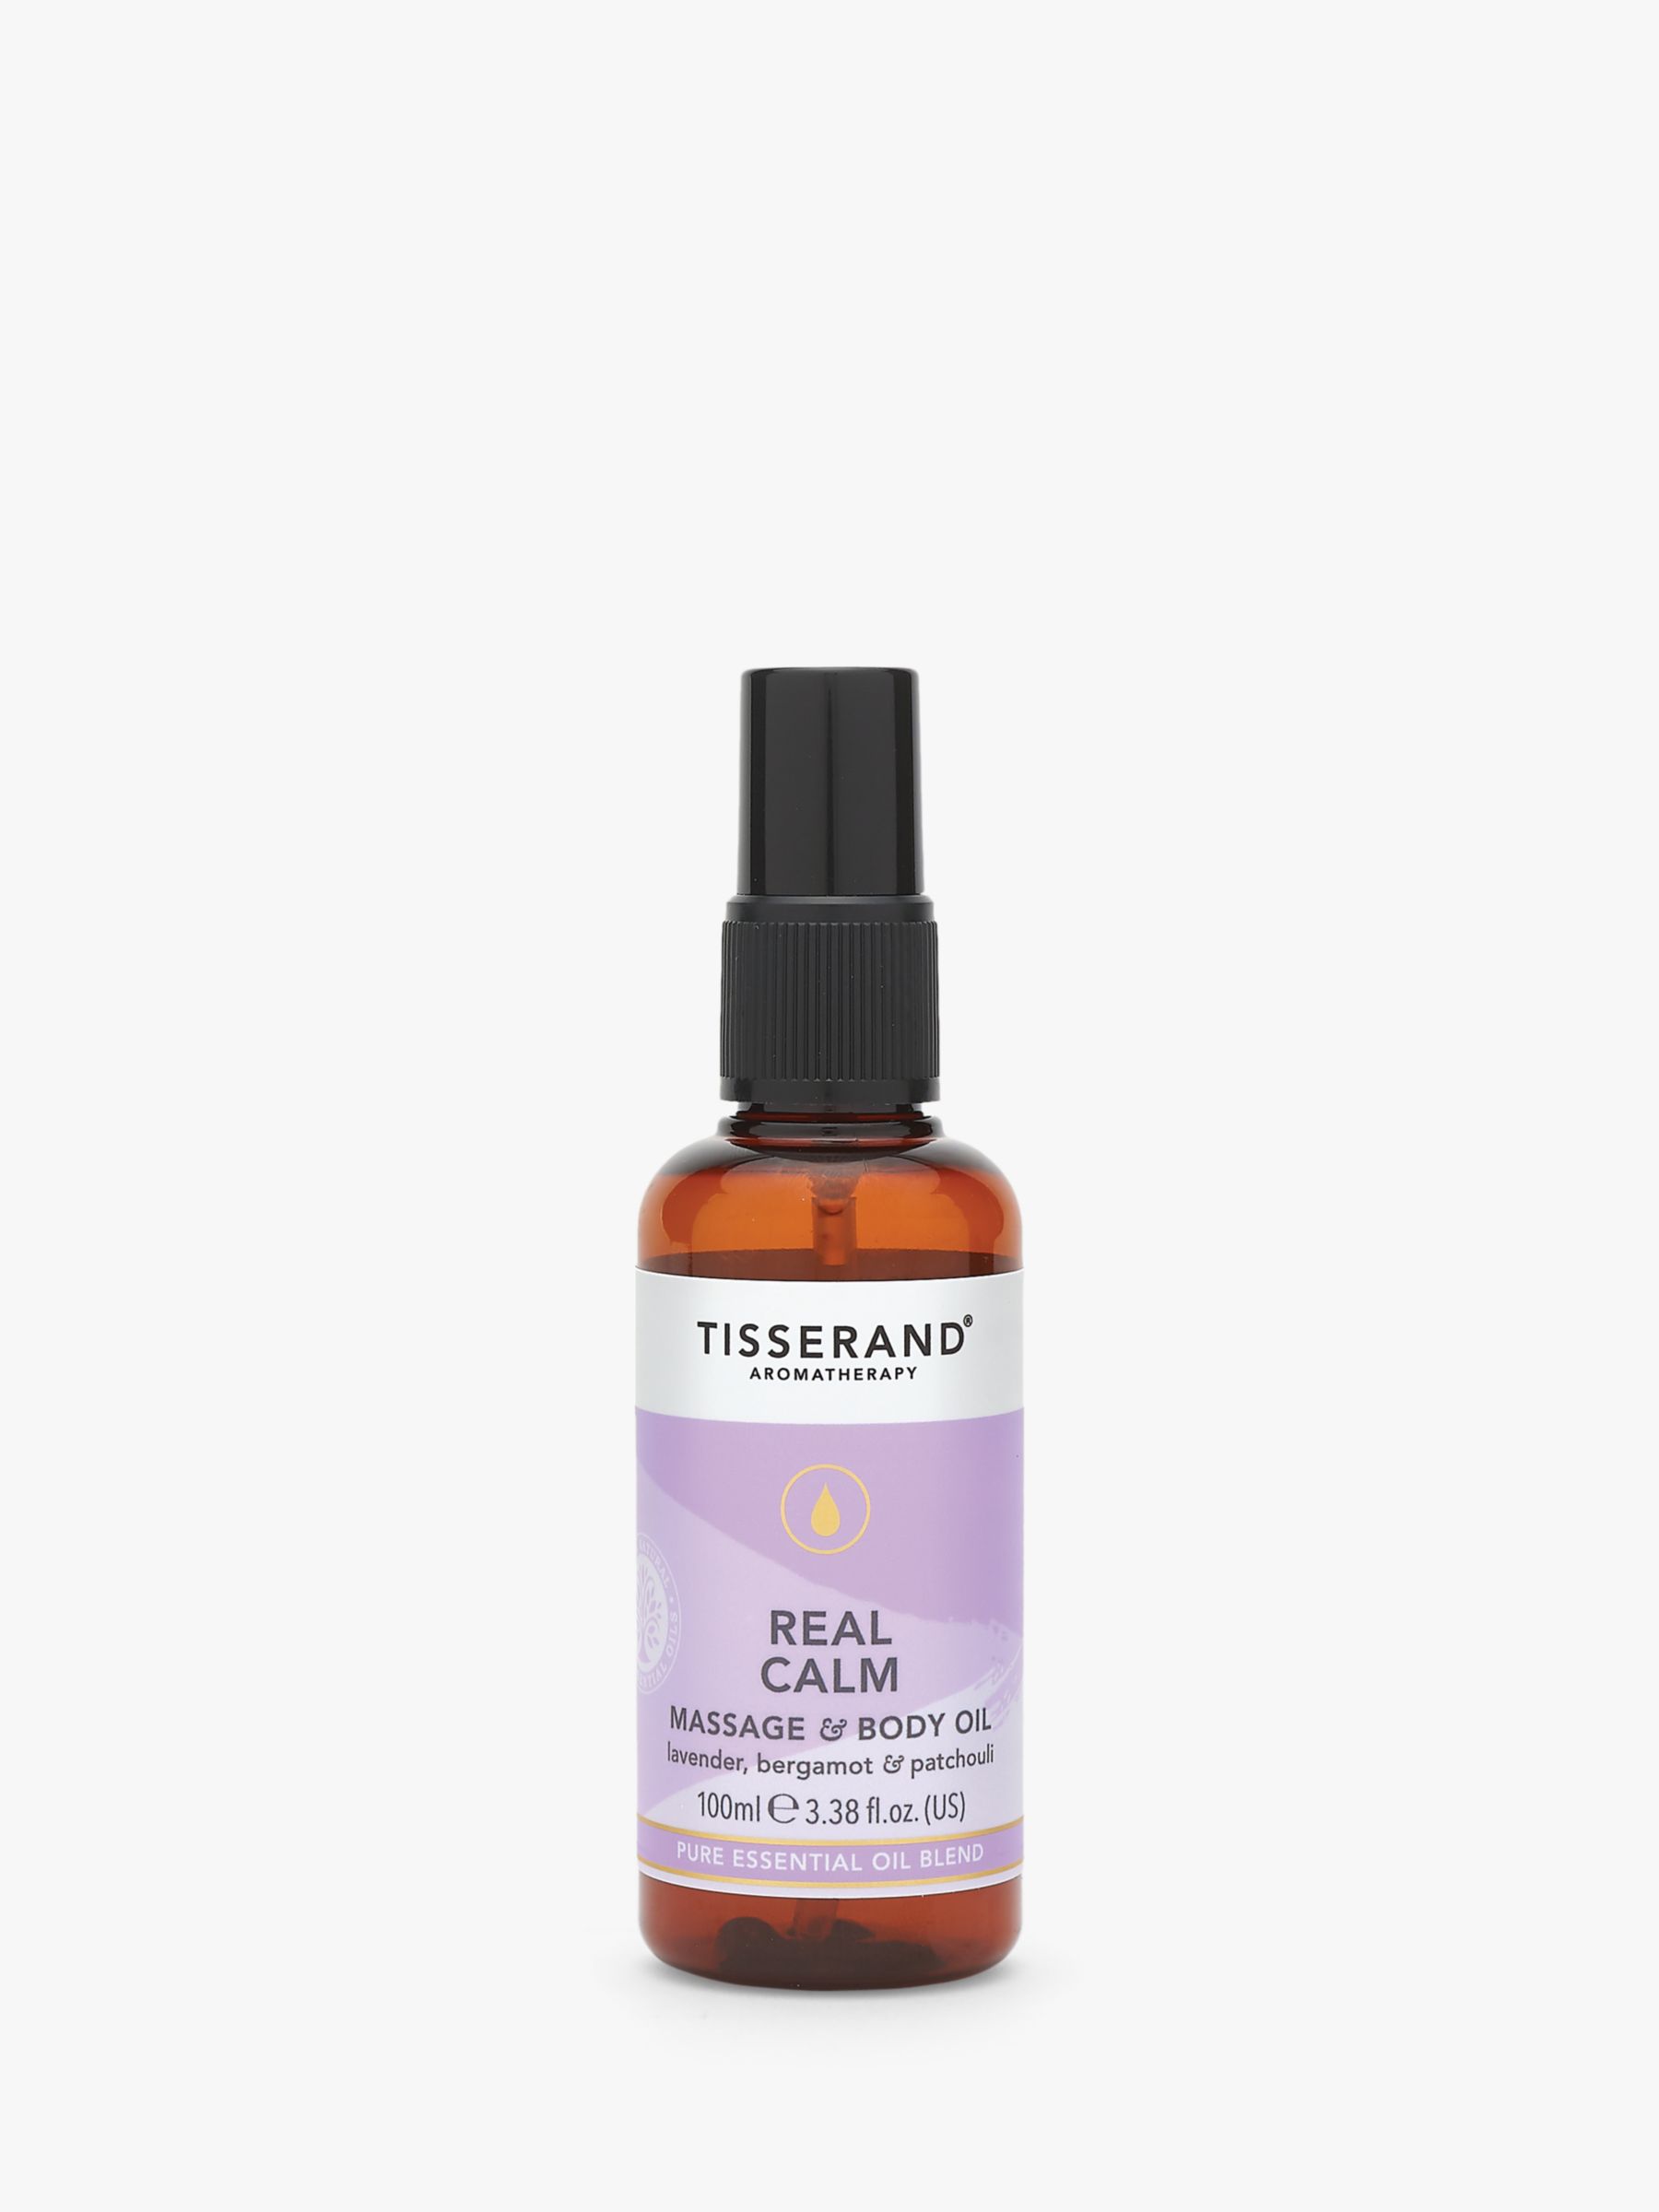 Tisserand Aromatherapy Real Calm Massage & Body Oil, 100ml 2